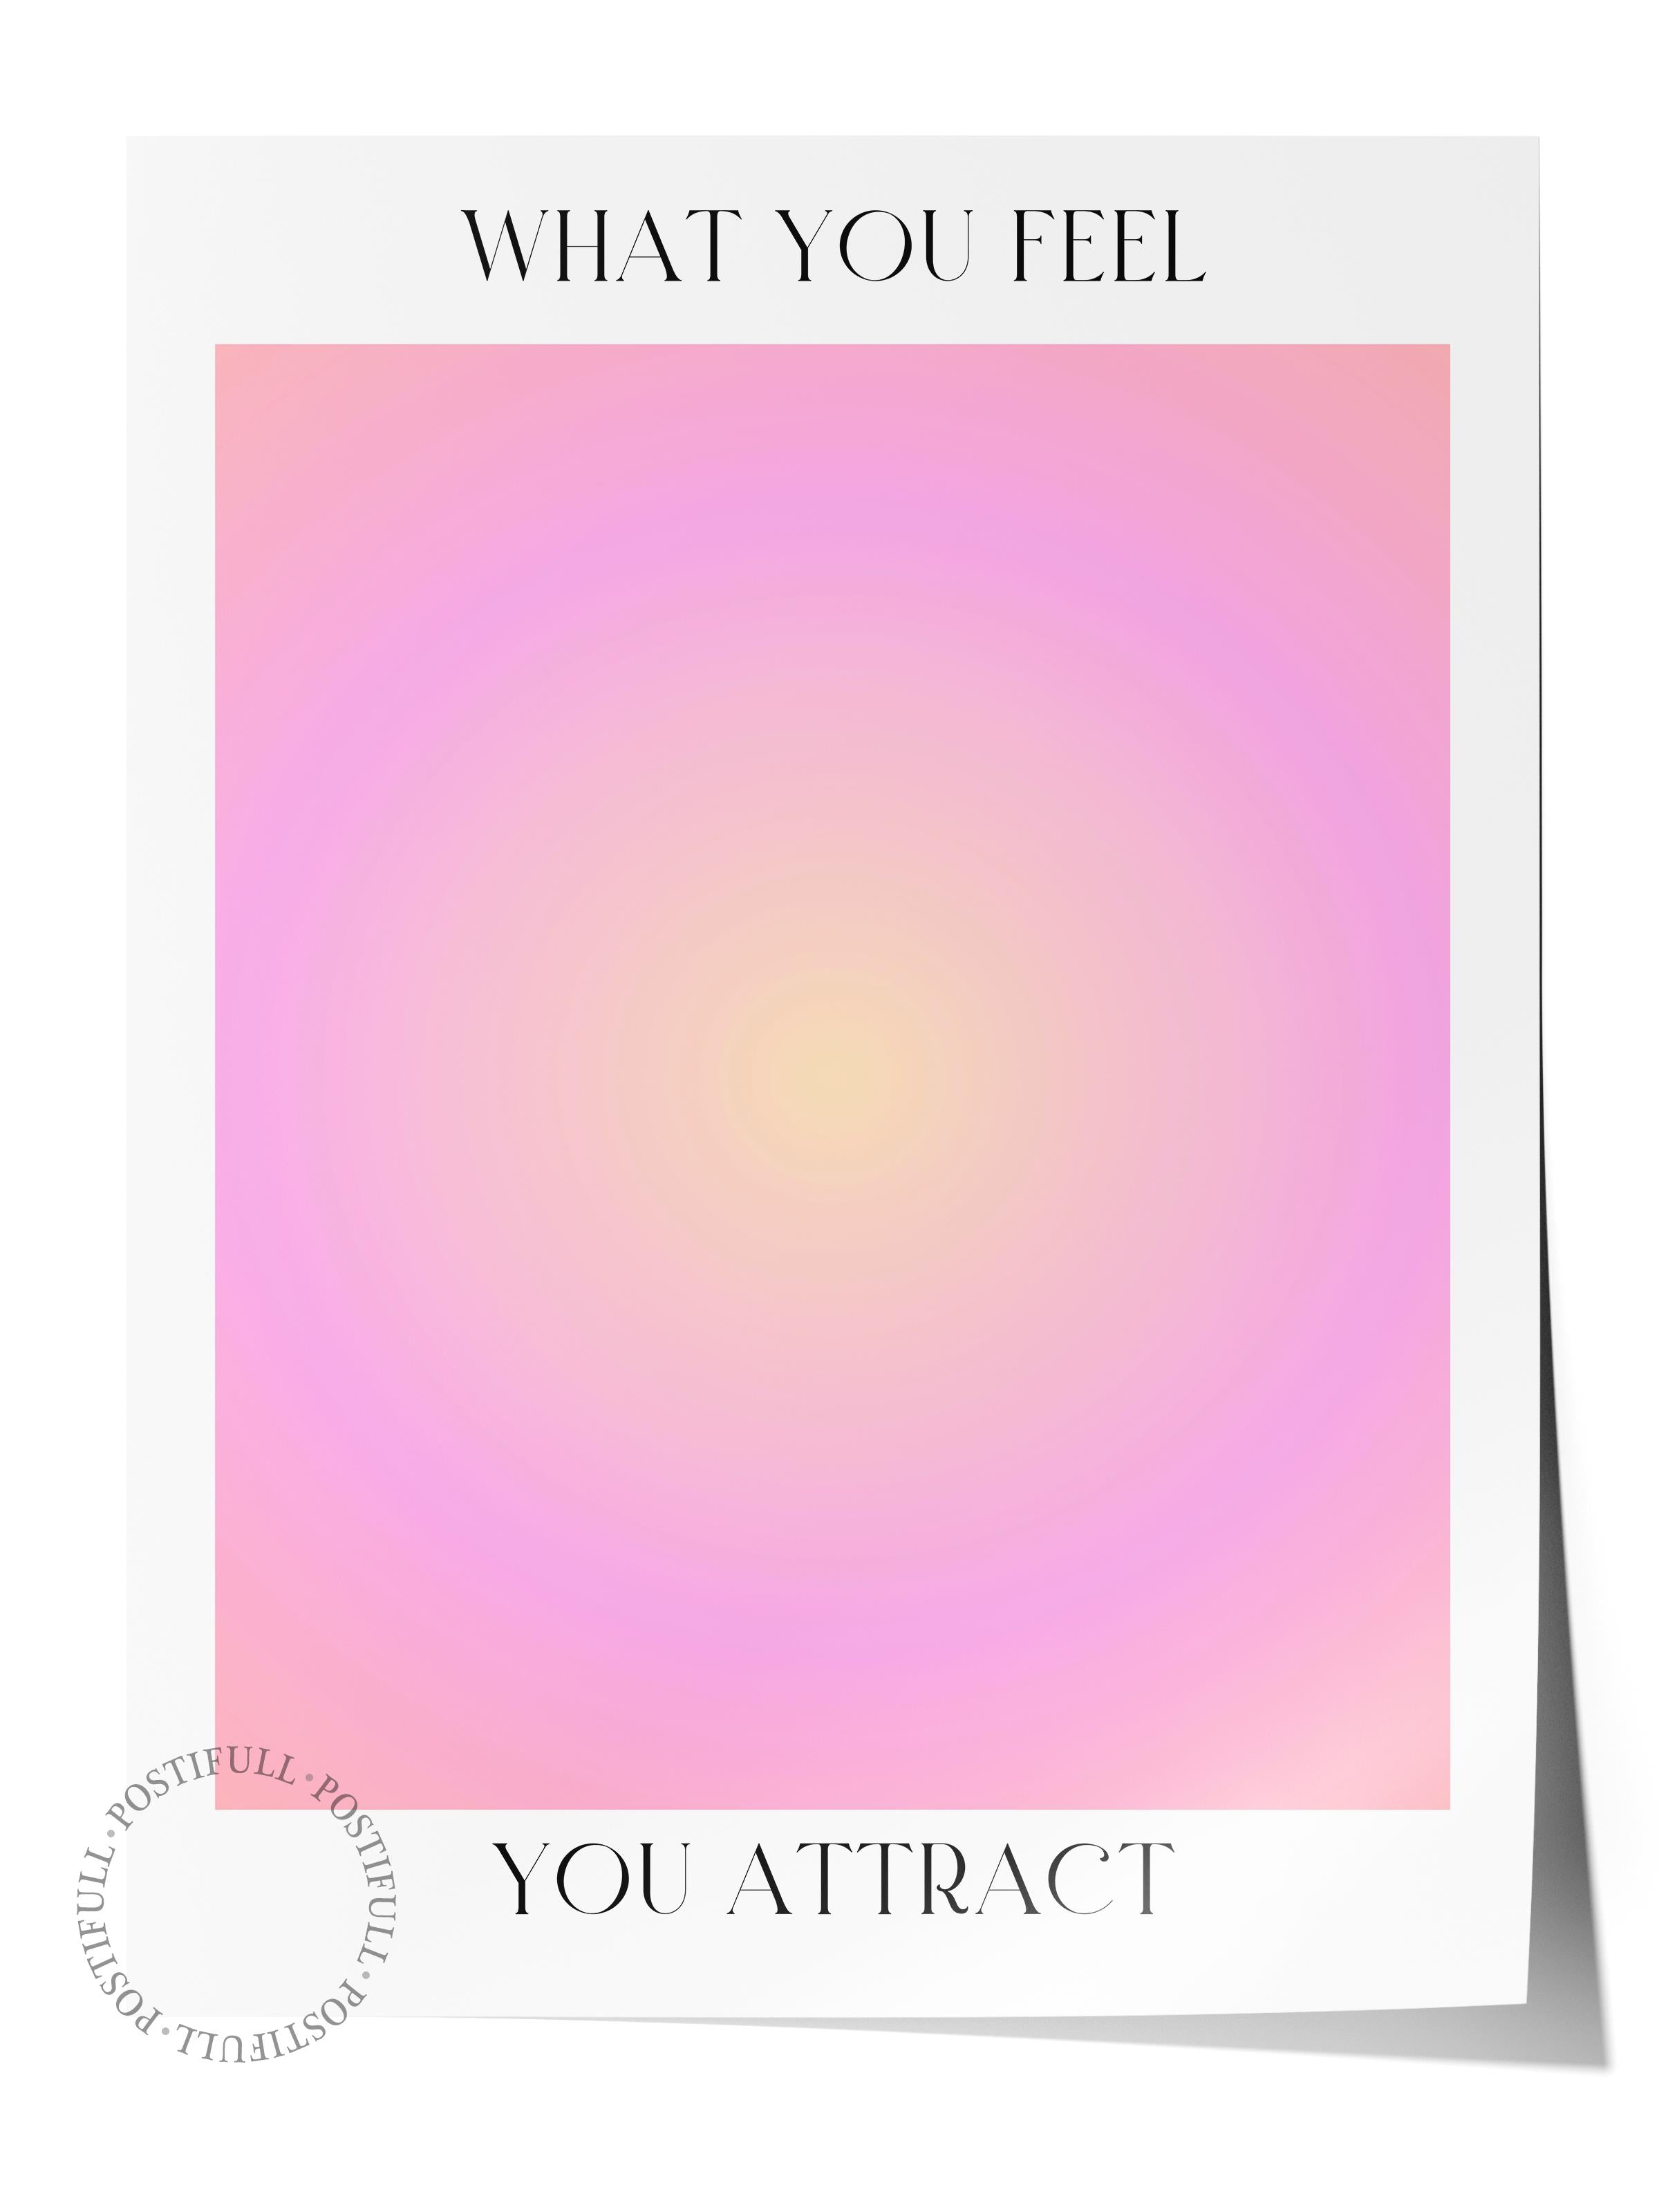 Çerçevesiz Poster, Aura Serisi NO:91 - What You Feel, You Attract, Melek Numaraları, Renkli Poster